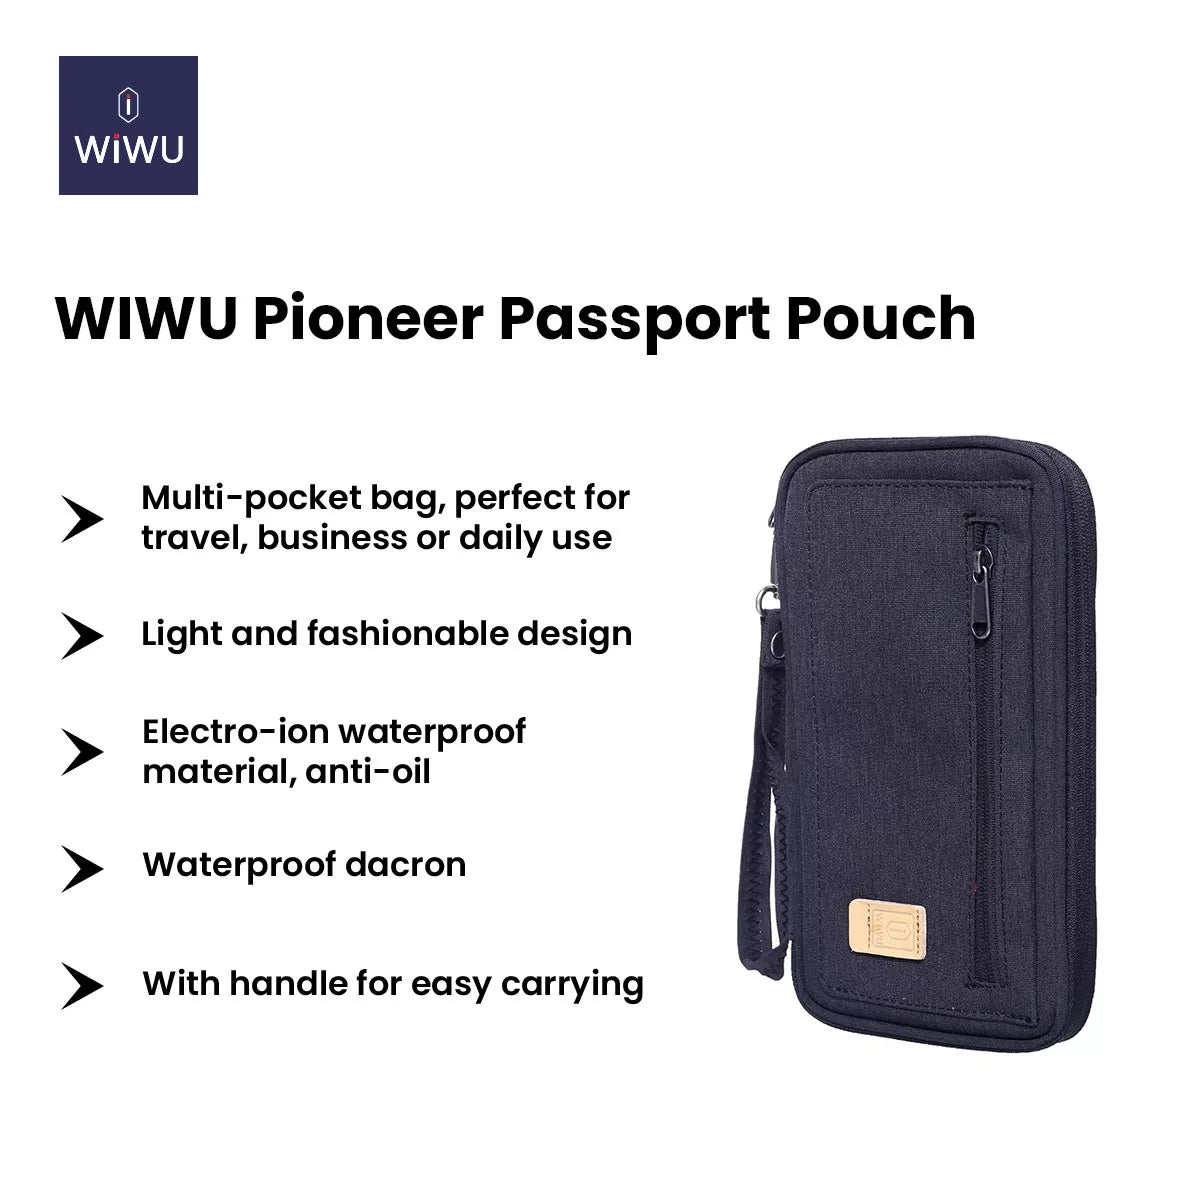 WiWU Pioneer Passport Pouch